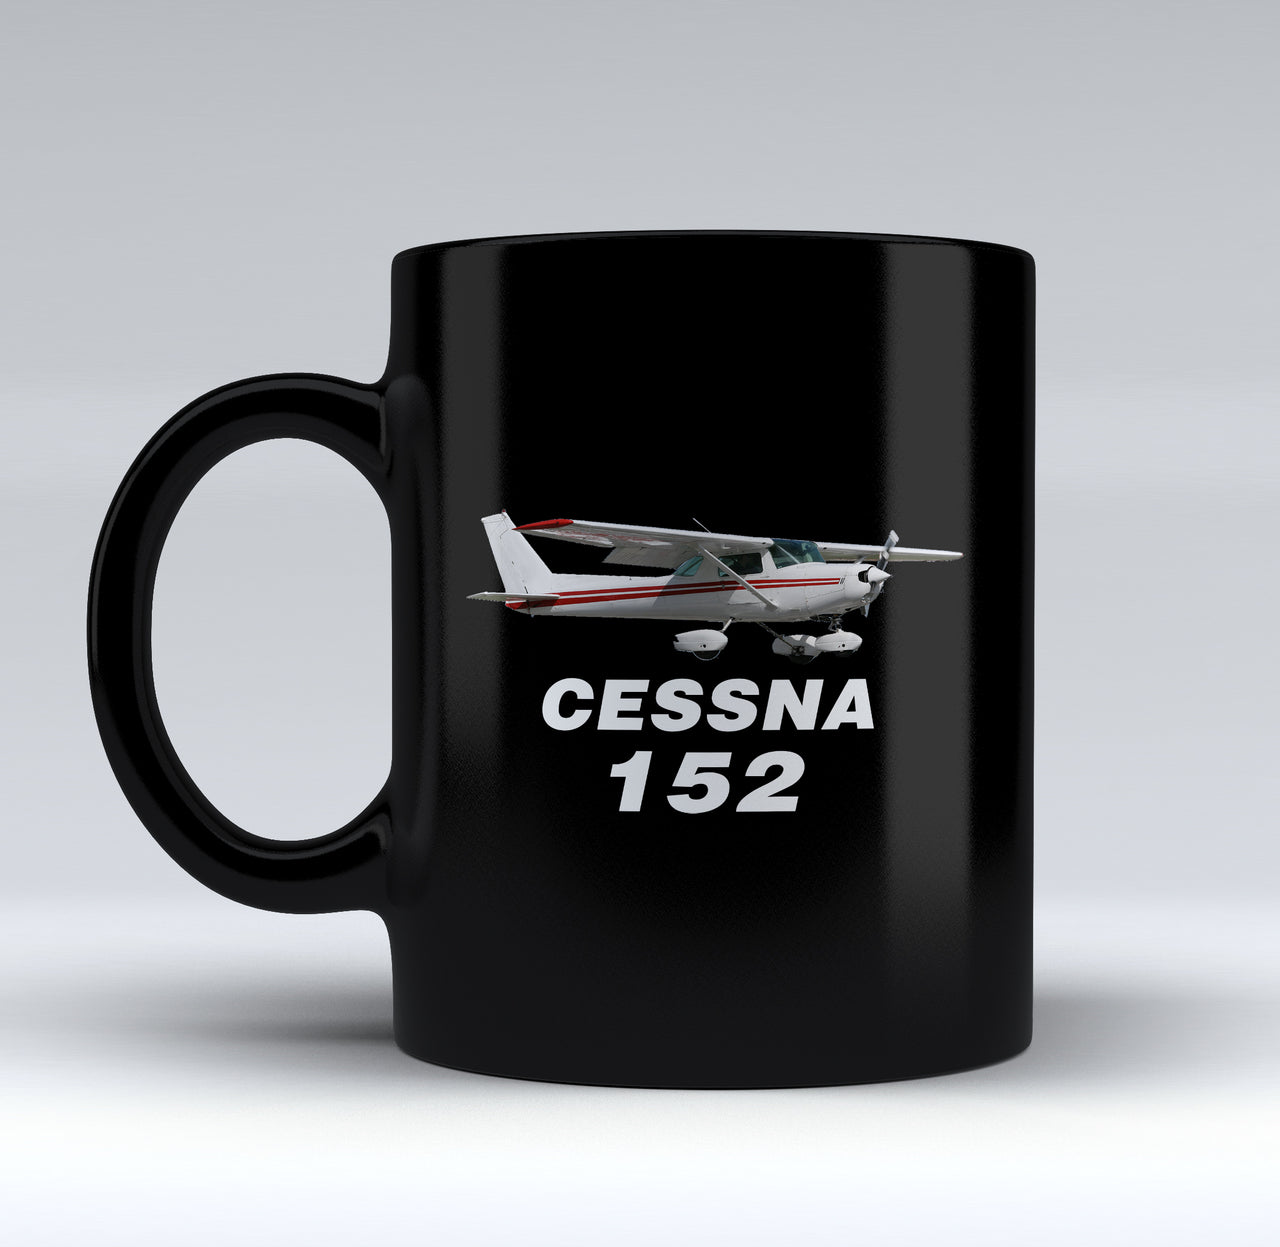 The Cessna 152 Designed Black Mugs